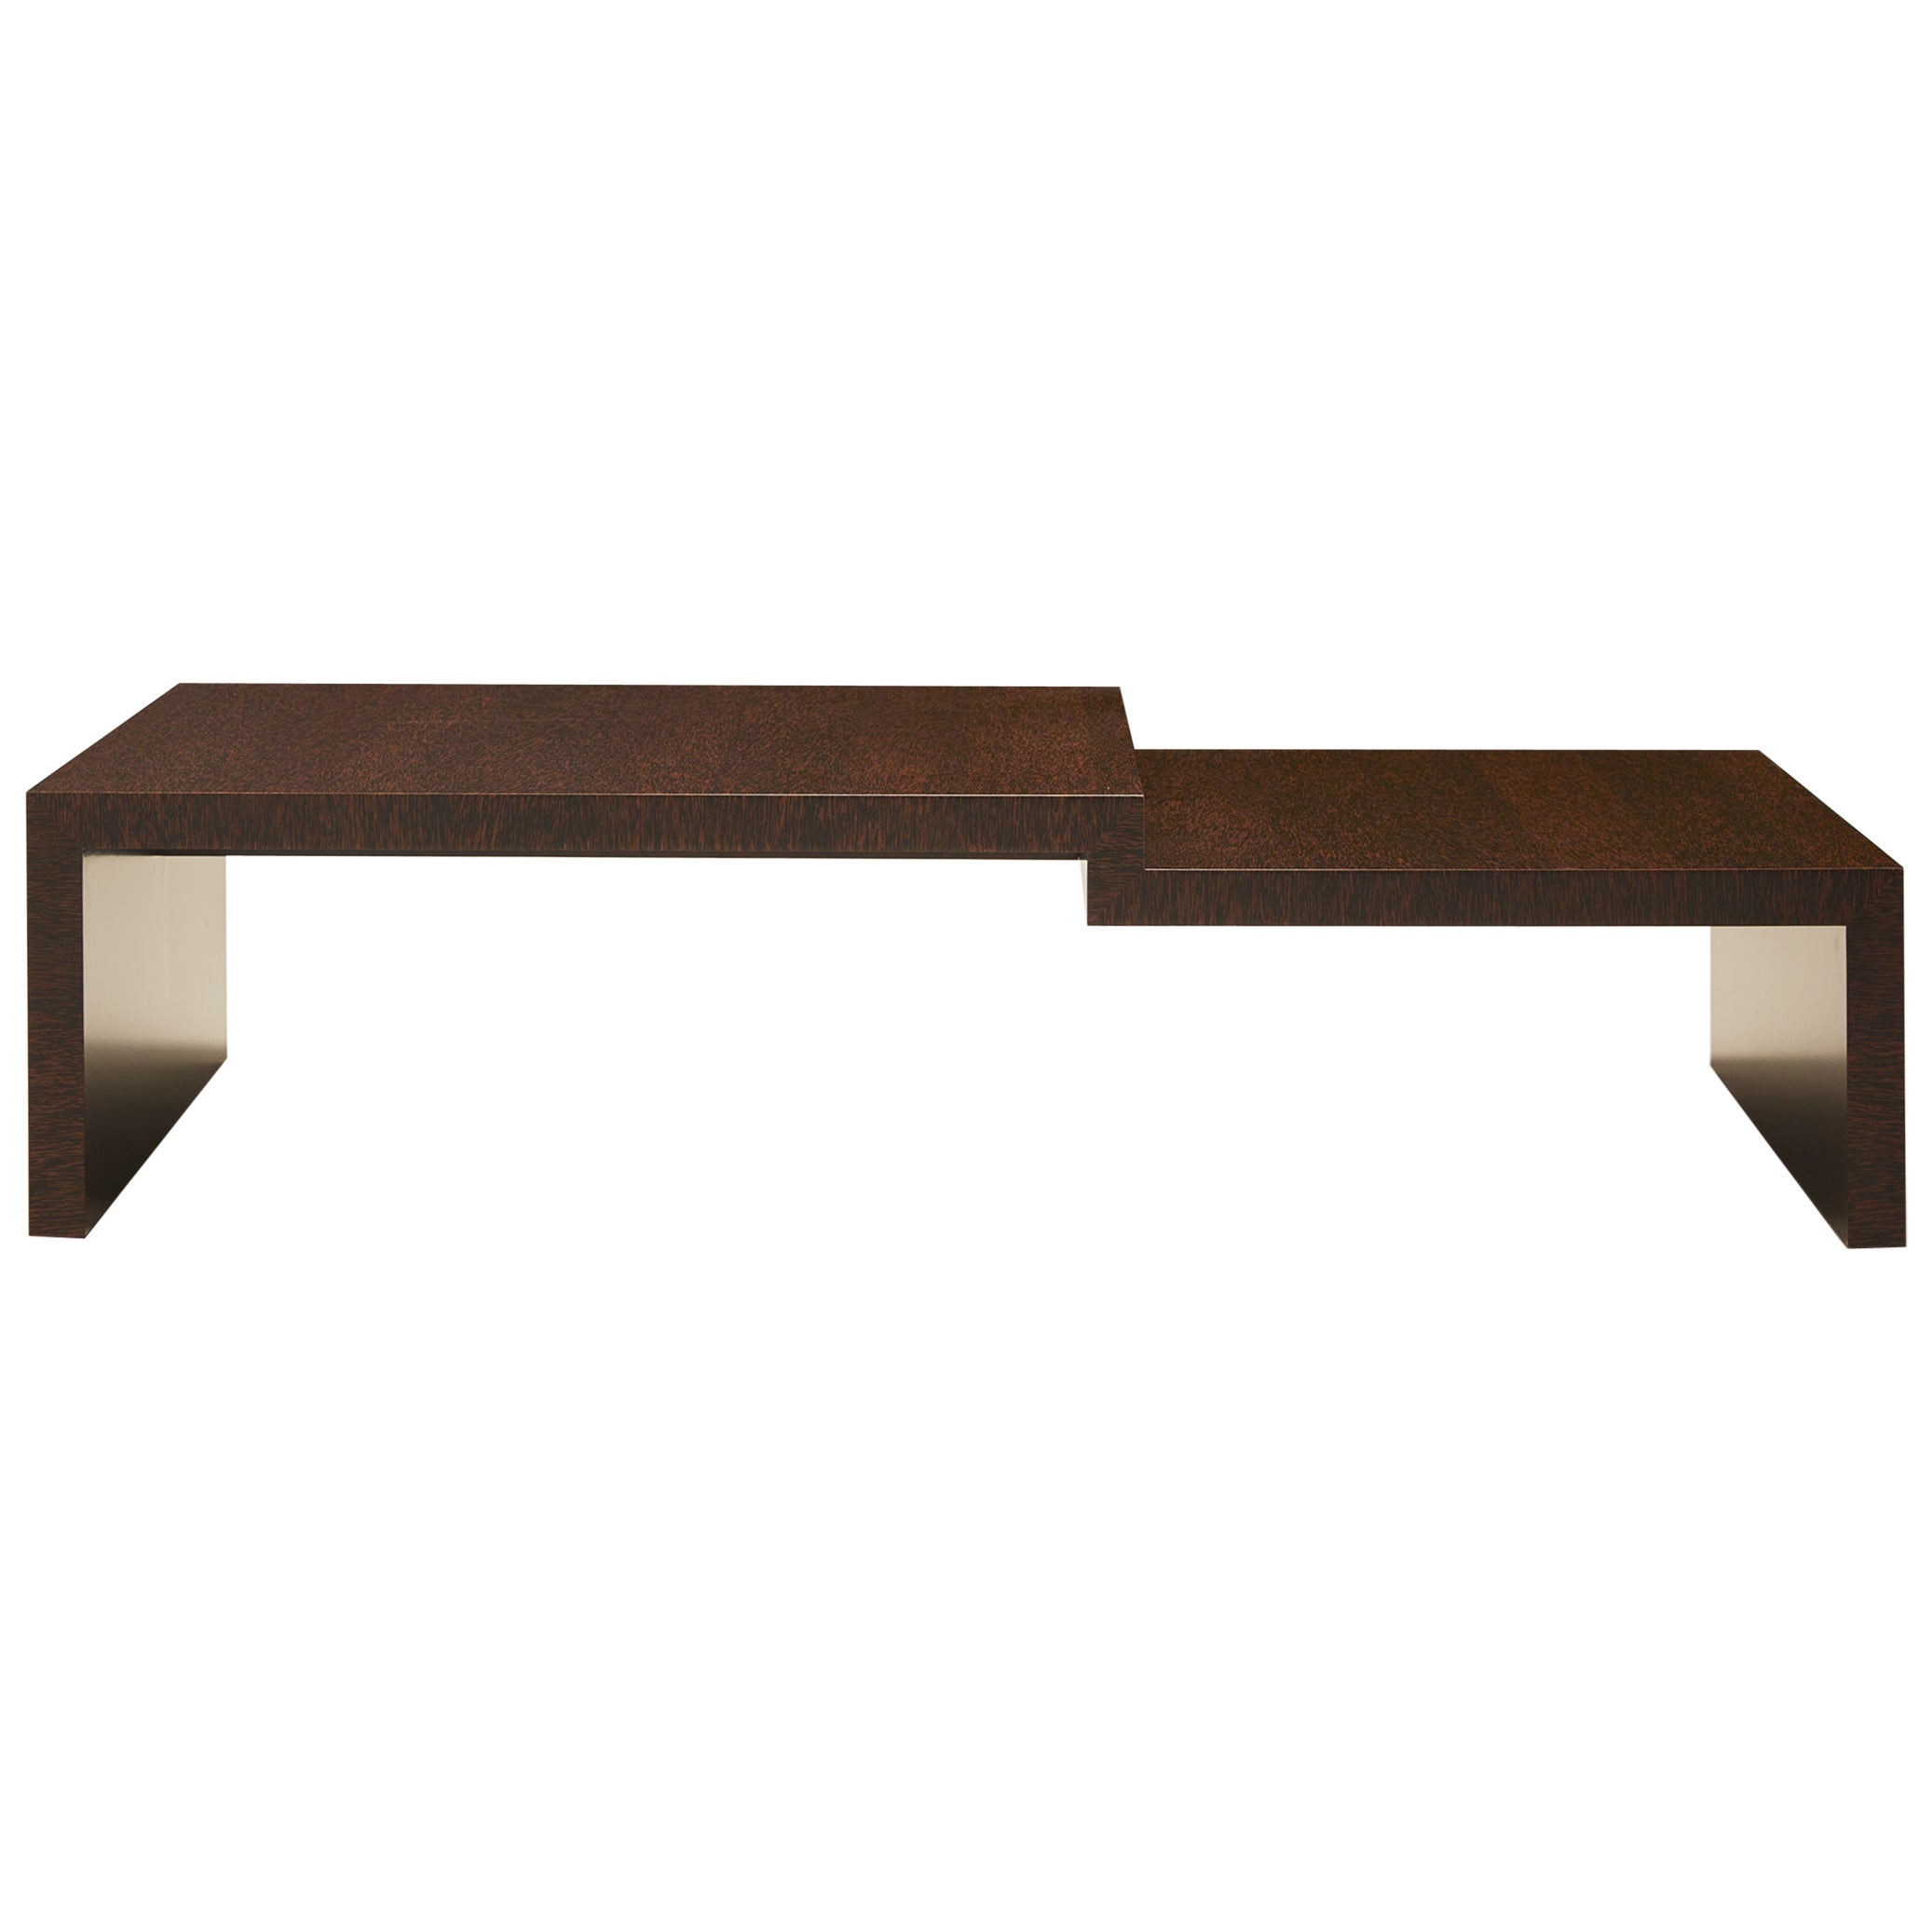 Continuous Coffee Table II - Hand applied wood veneer